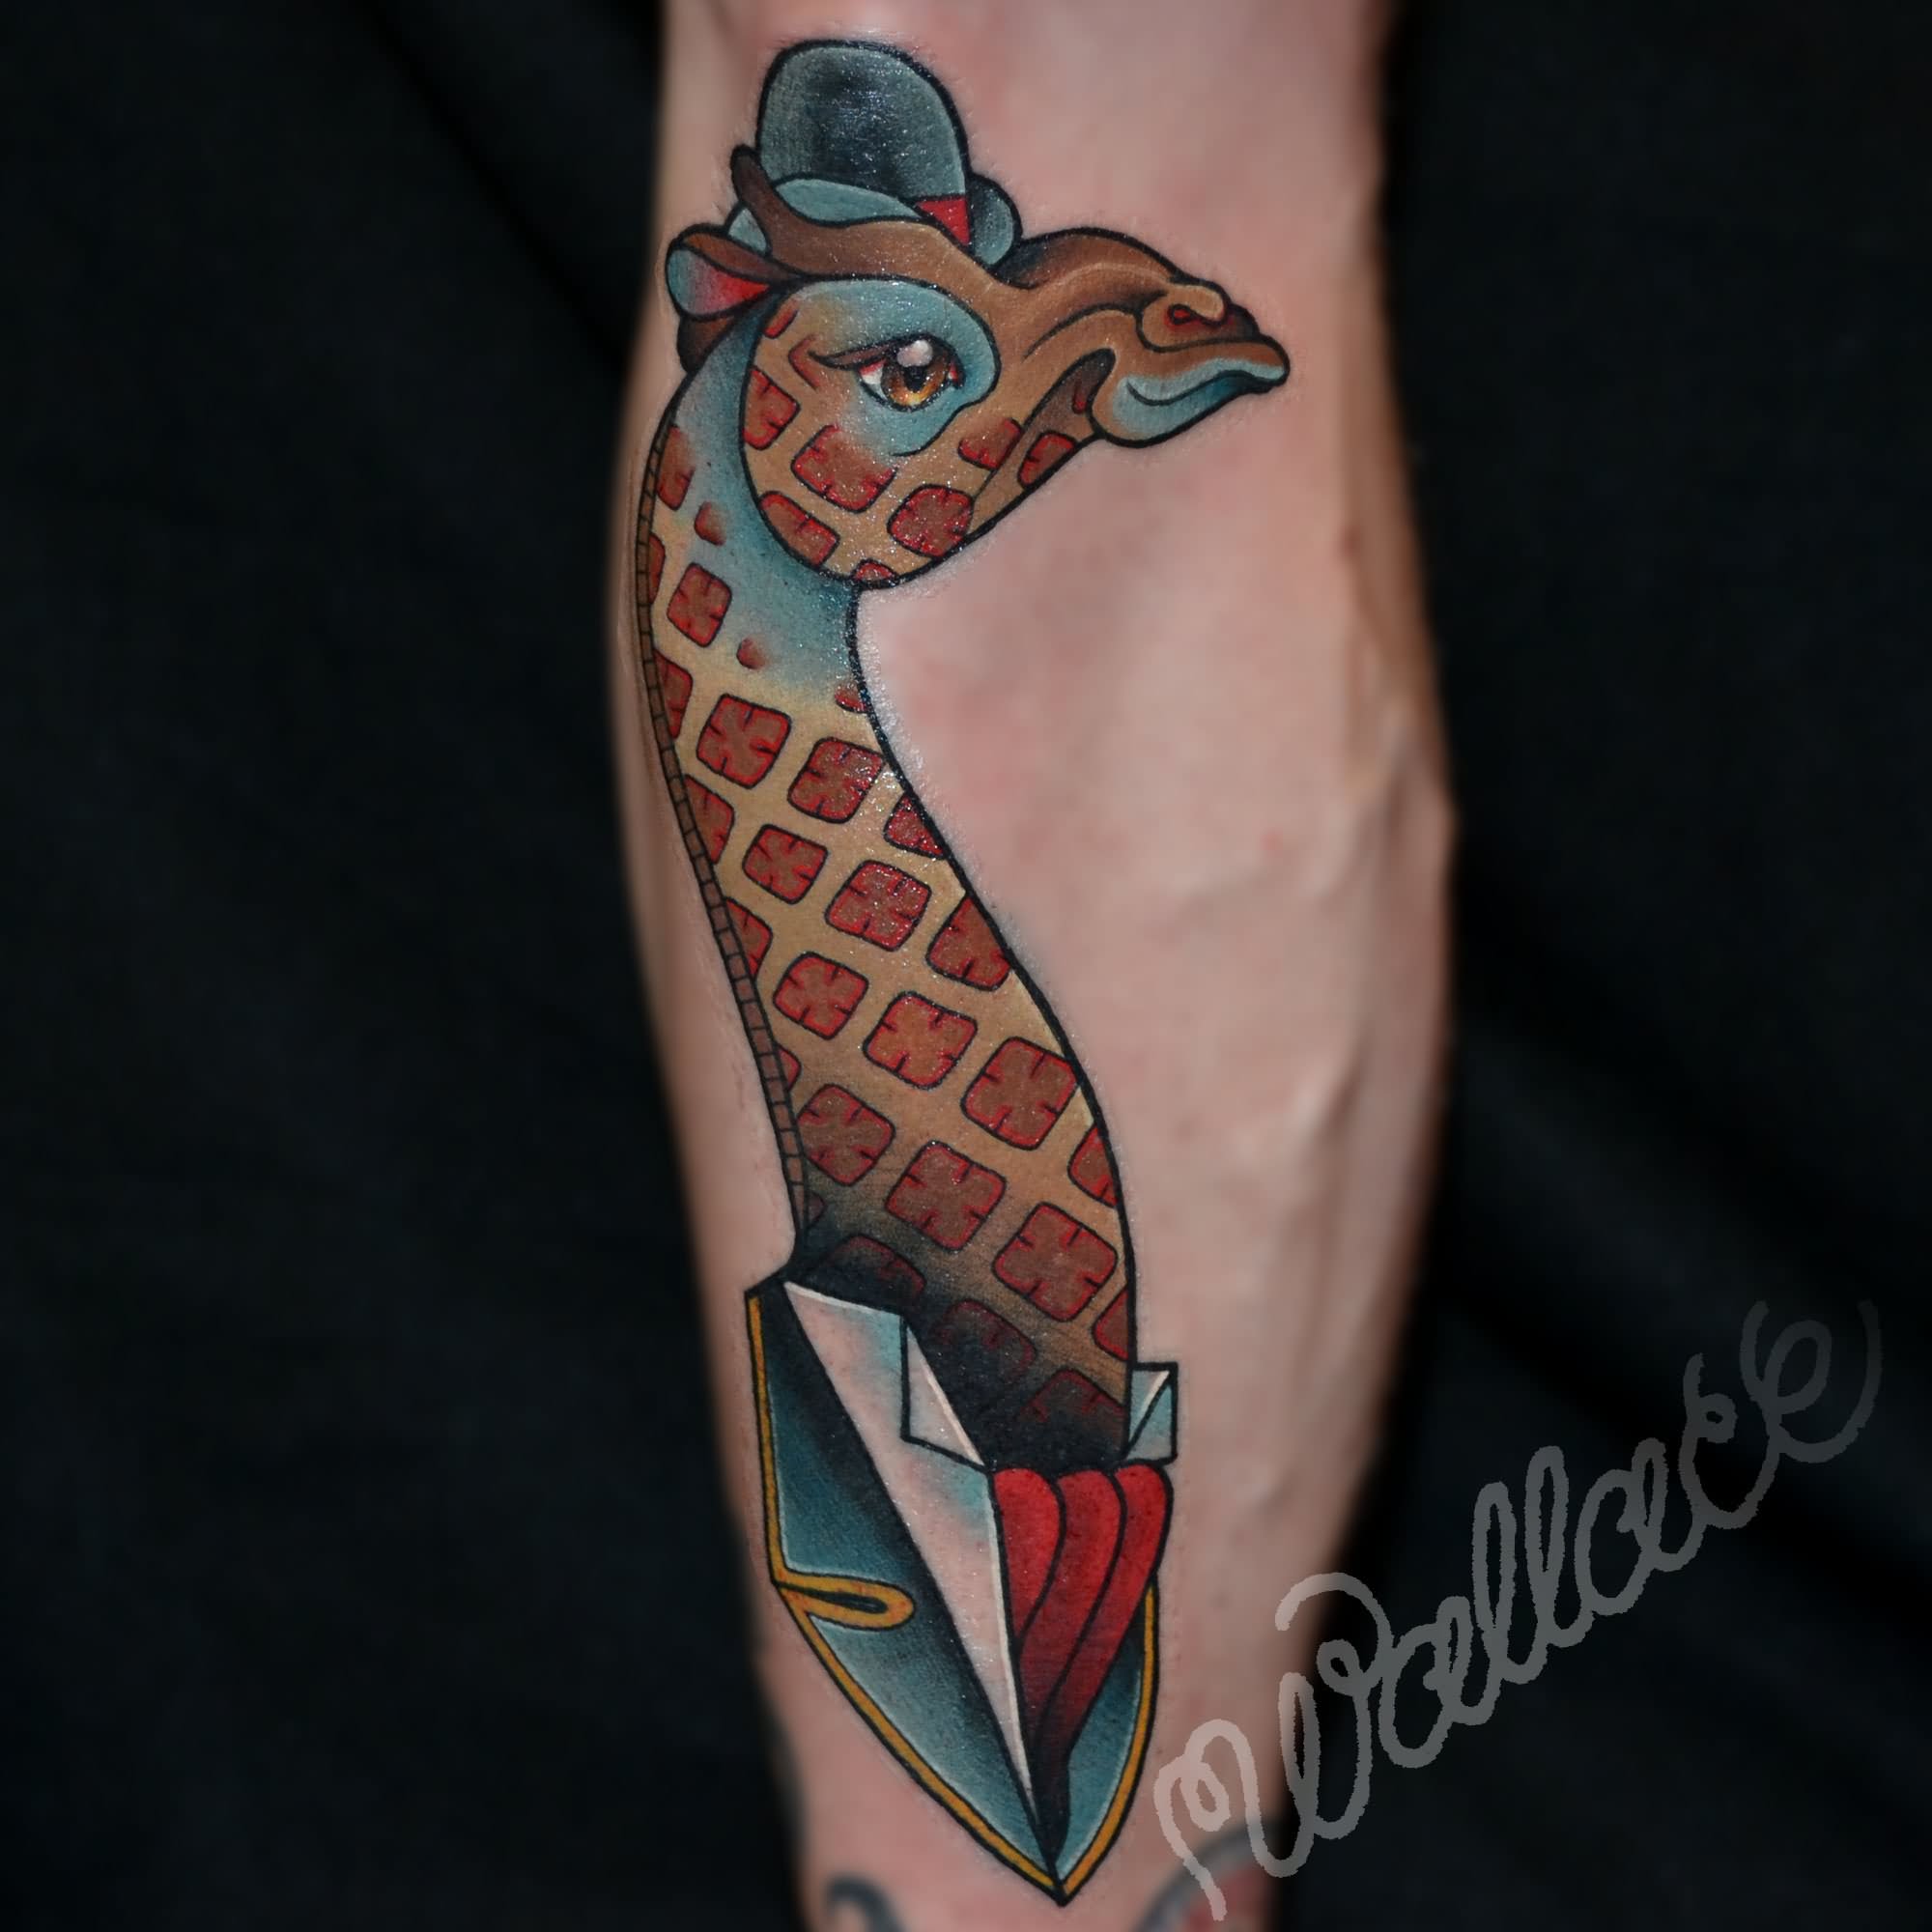 Dapper Giraffe Tattoo on Forearm by Raymond Wallace